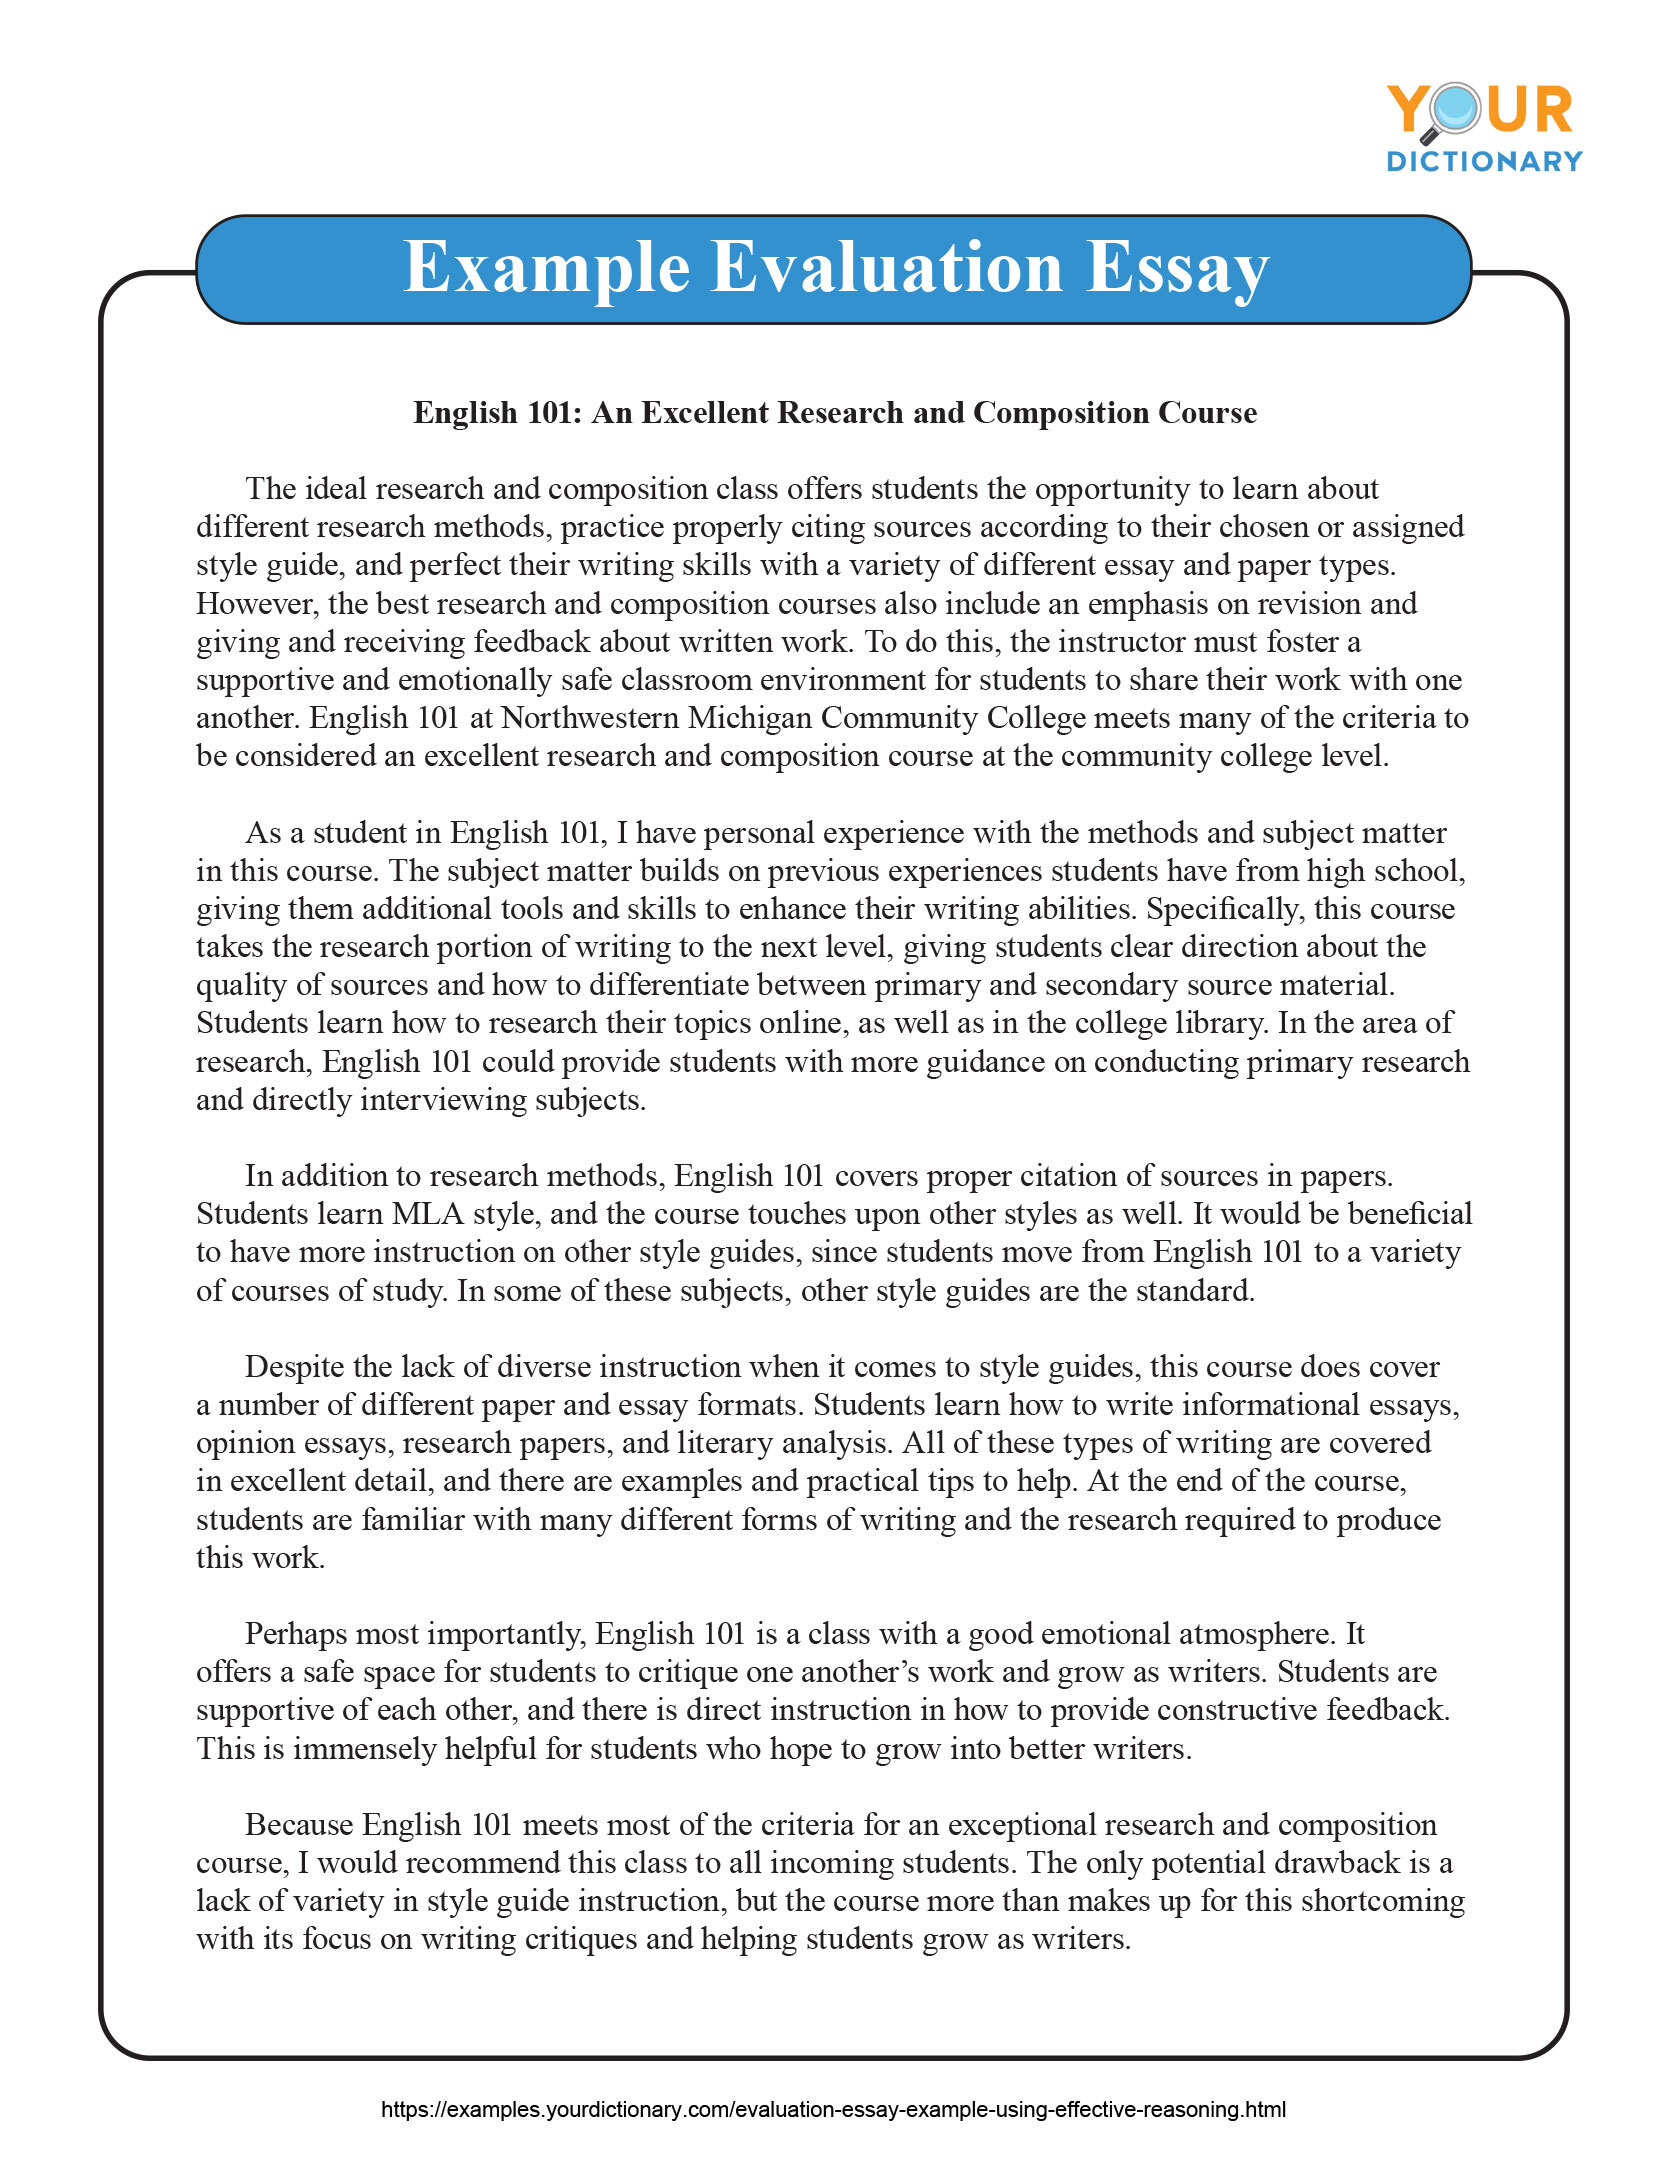 argument of evaluation essay example